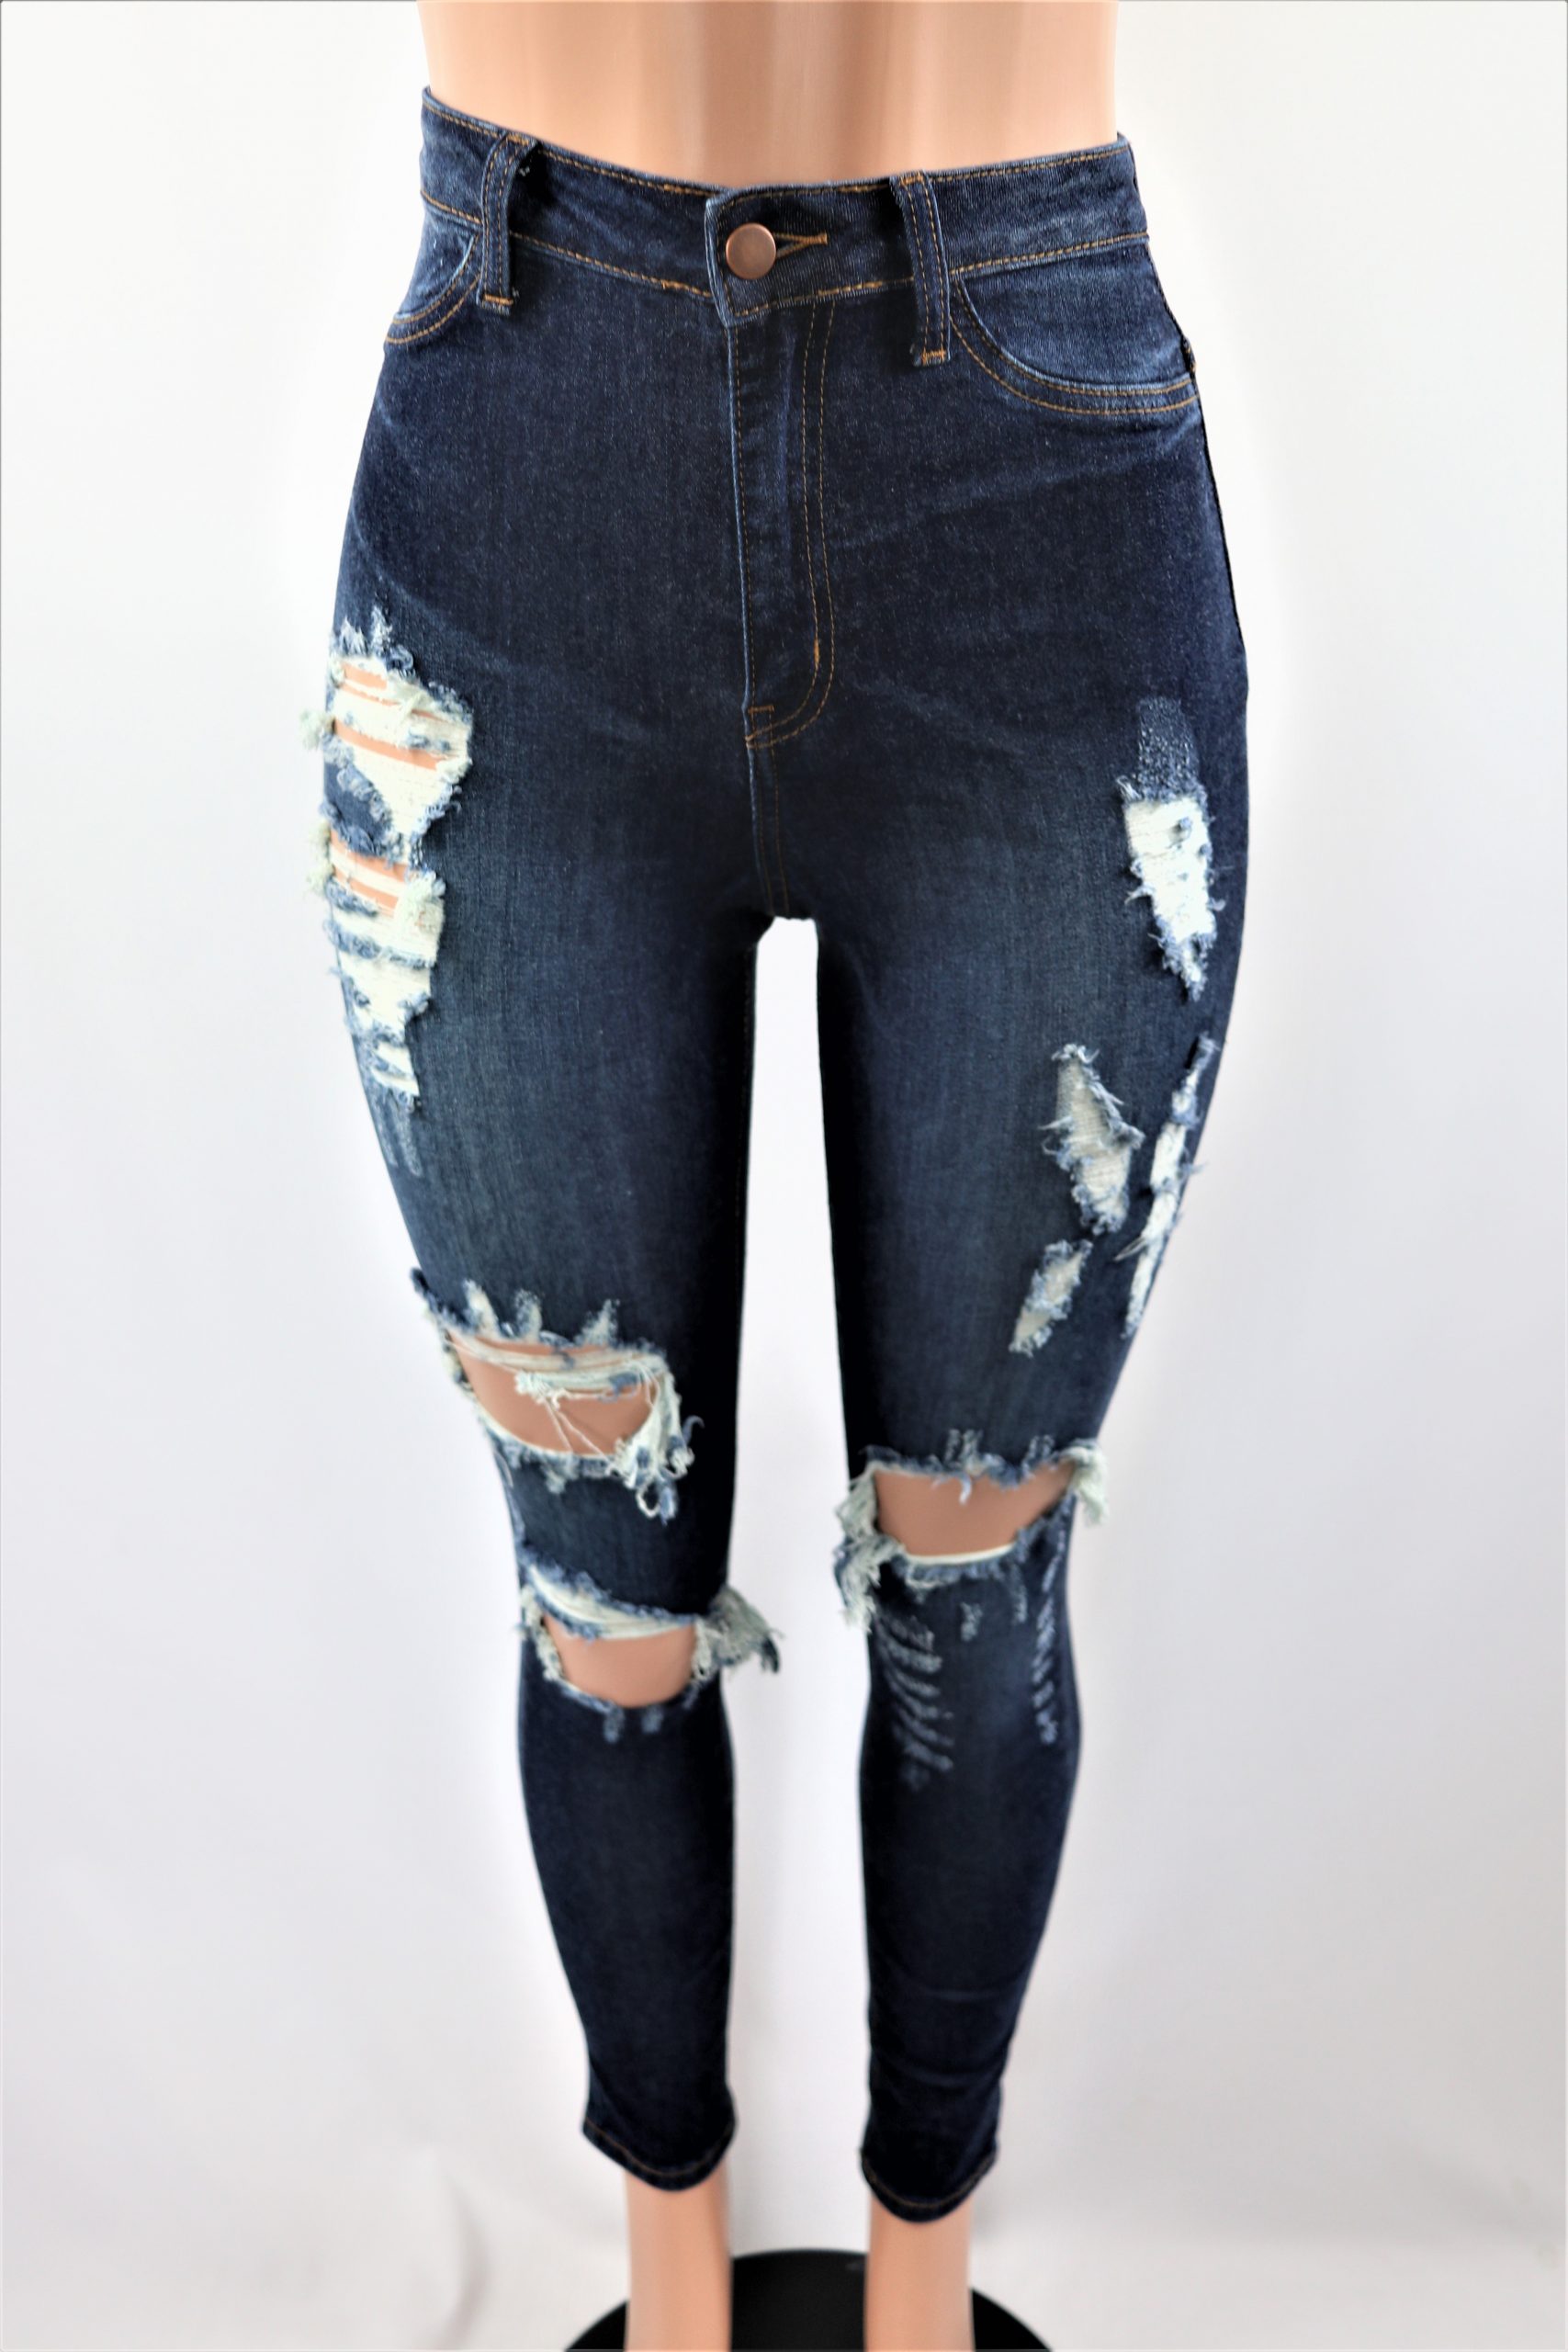 Johnson Jeans - Dark denim high waist ripped distressed skinny jeans.